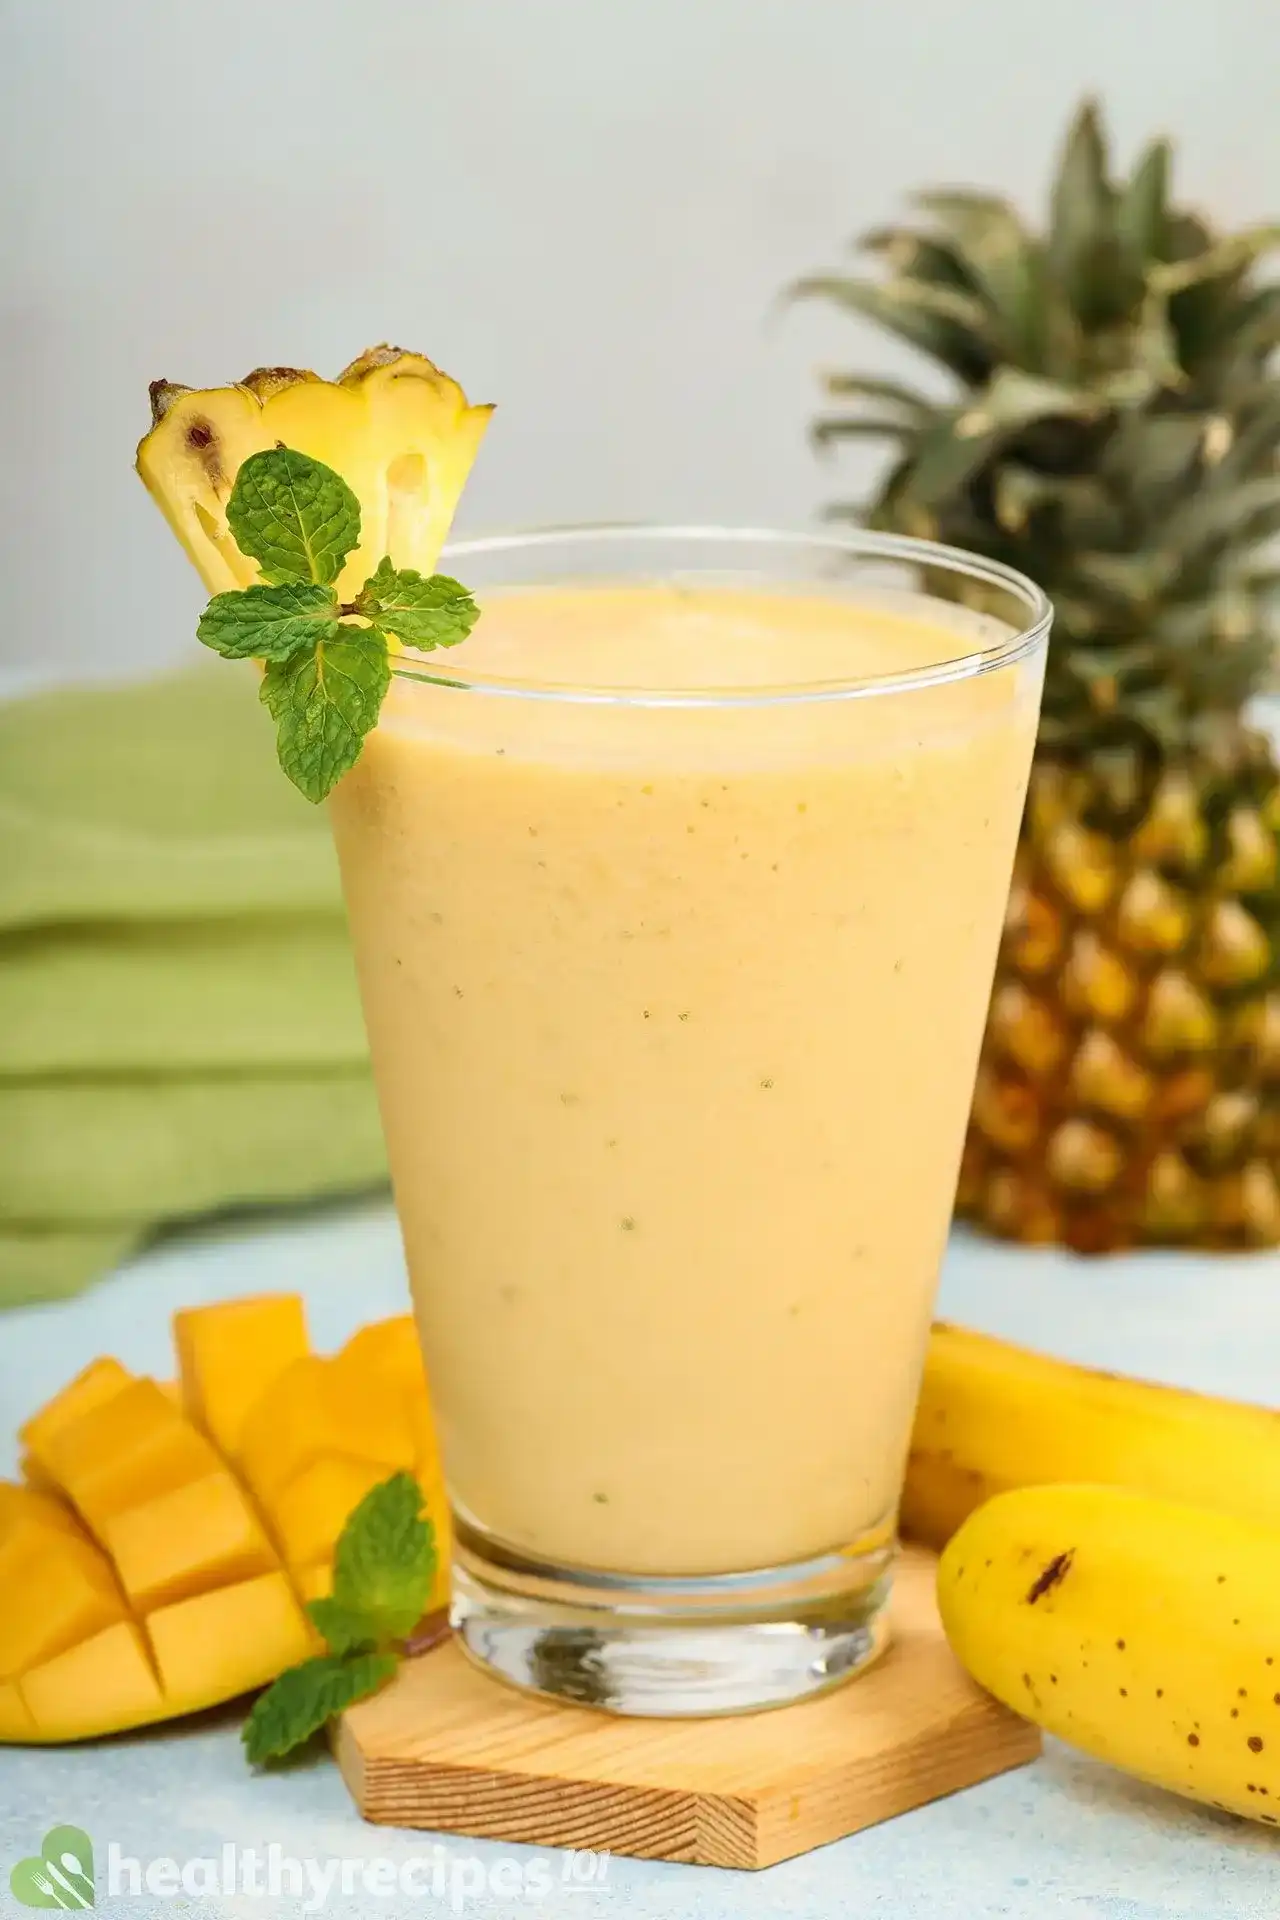 Mango Pineapple Banana Smoothie Recipe: A Refreshing Tropical Drink